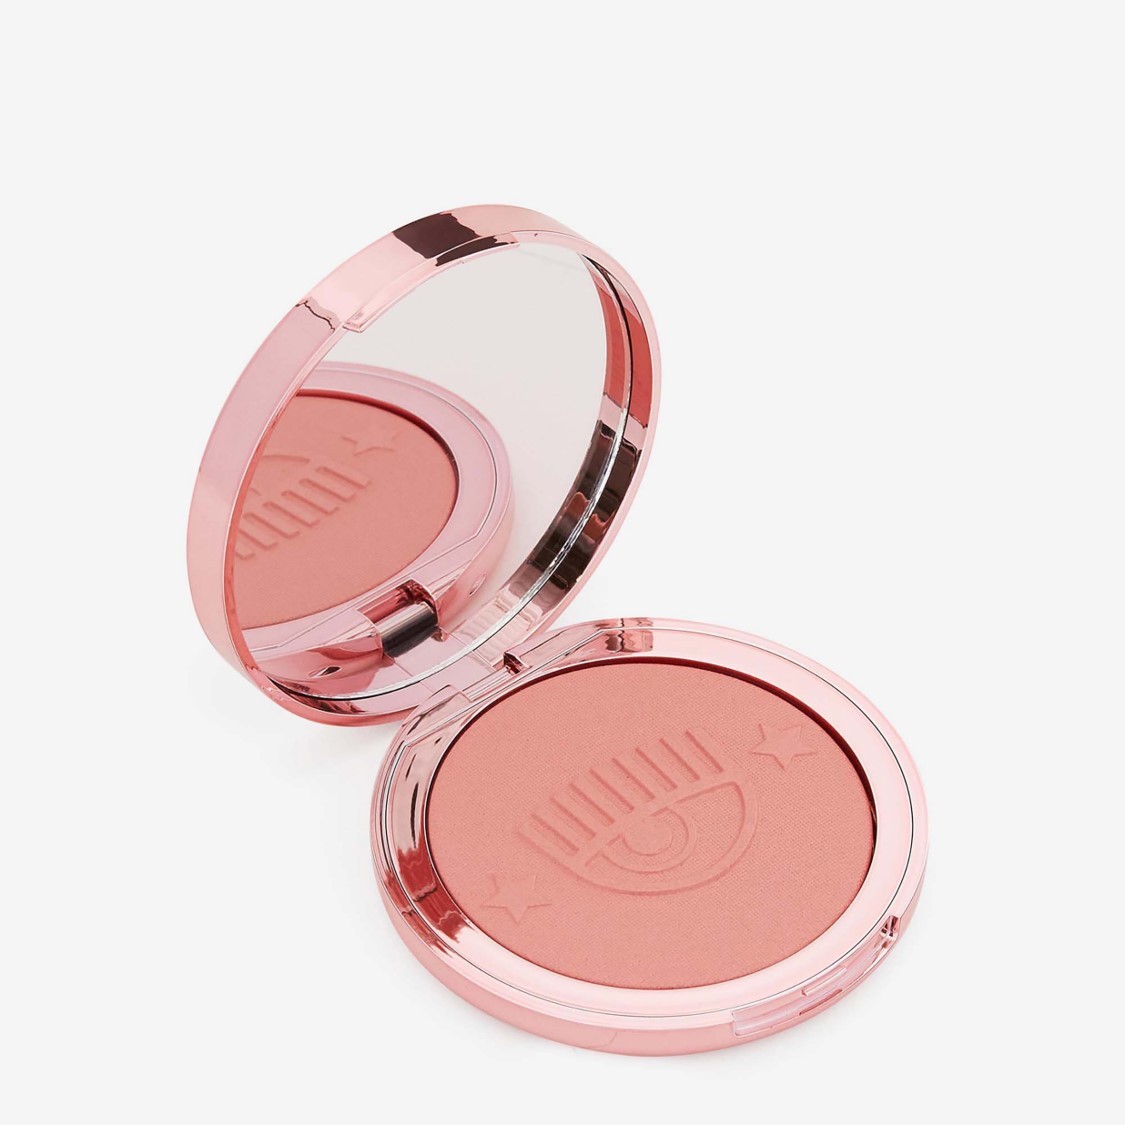 CHIARA FERRAGNI - Highlighting Blush Pink - 